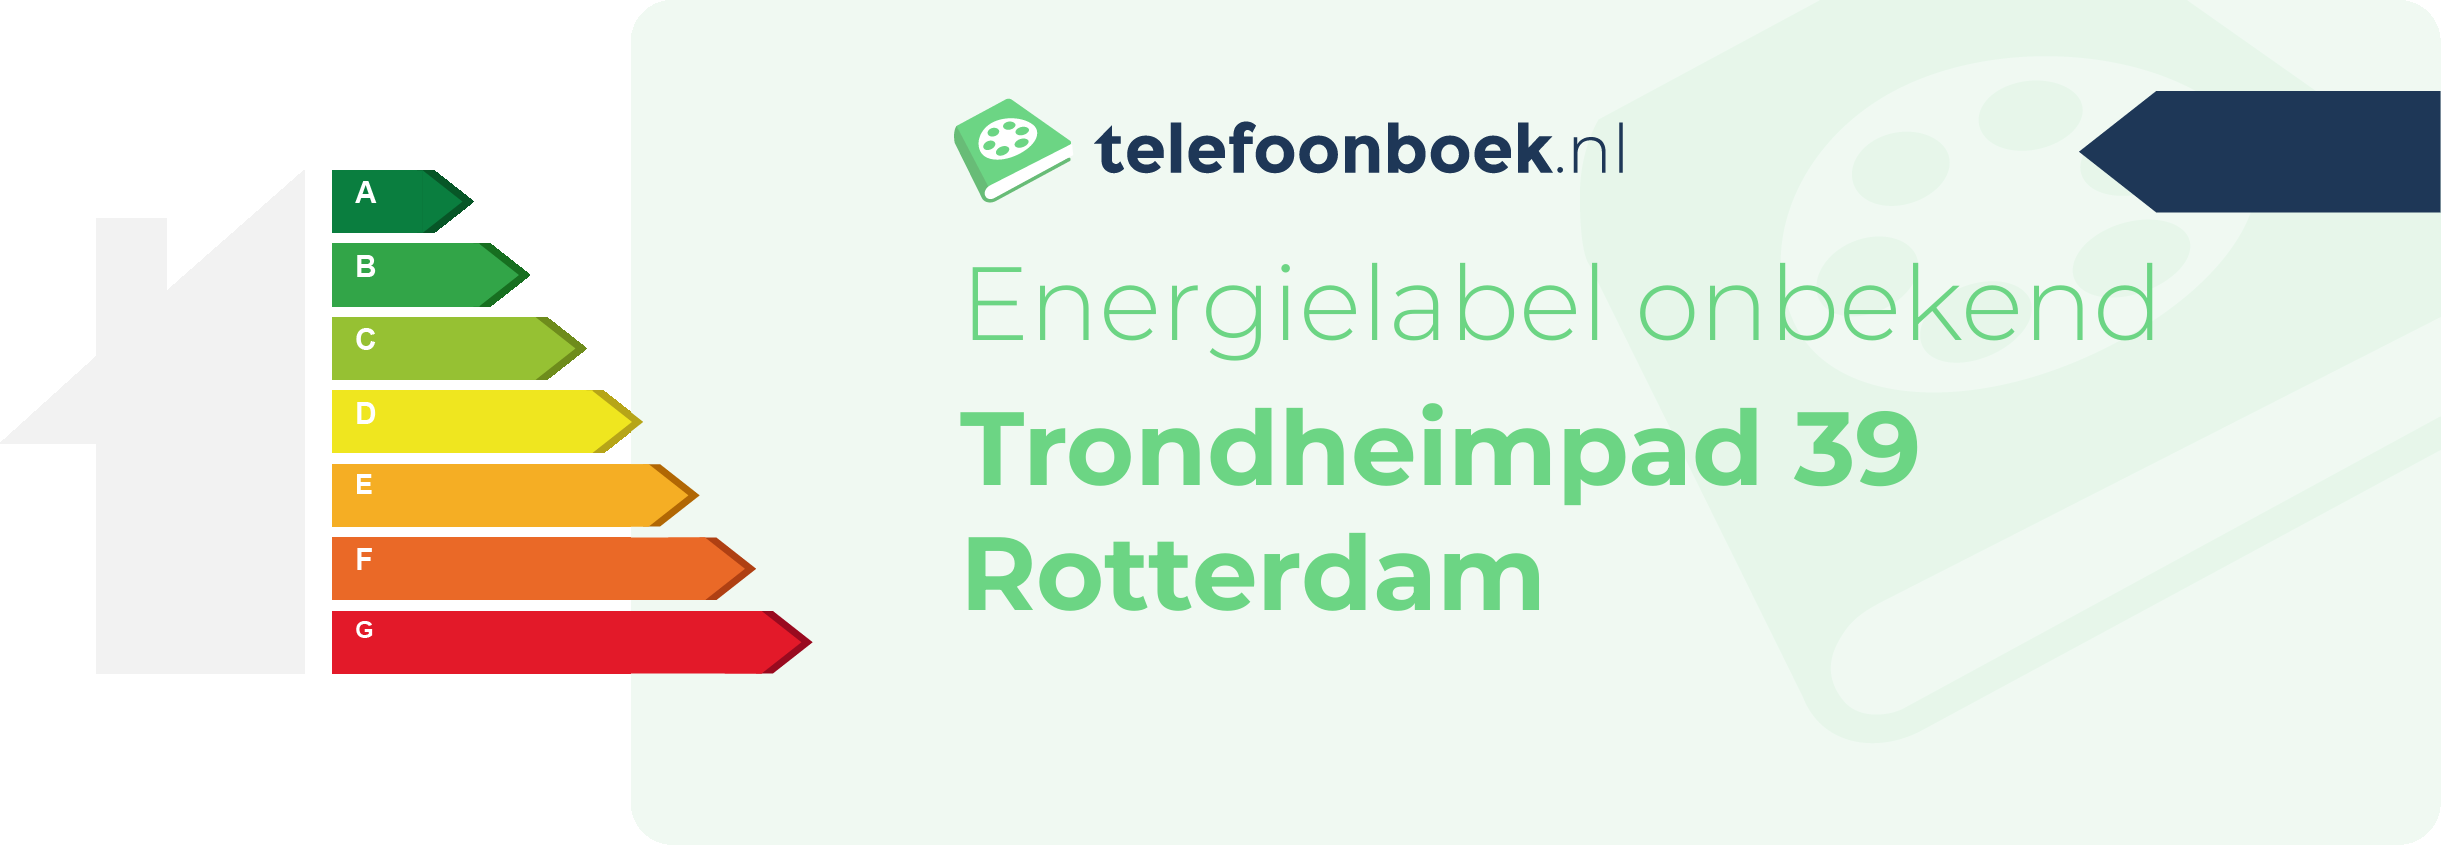 Energielabel Trondheimpad 39 Rotterdam